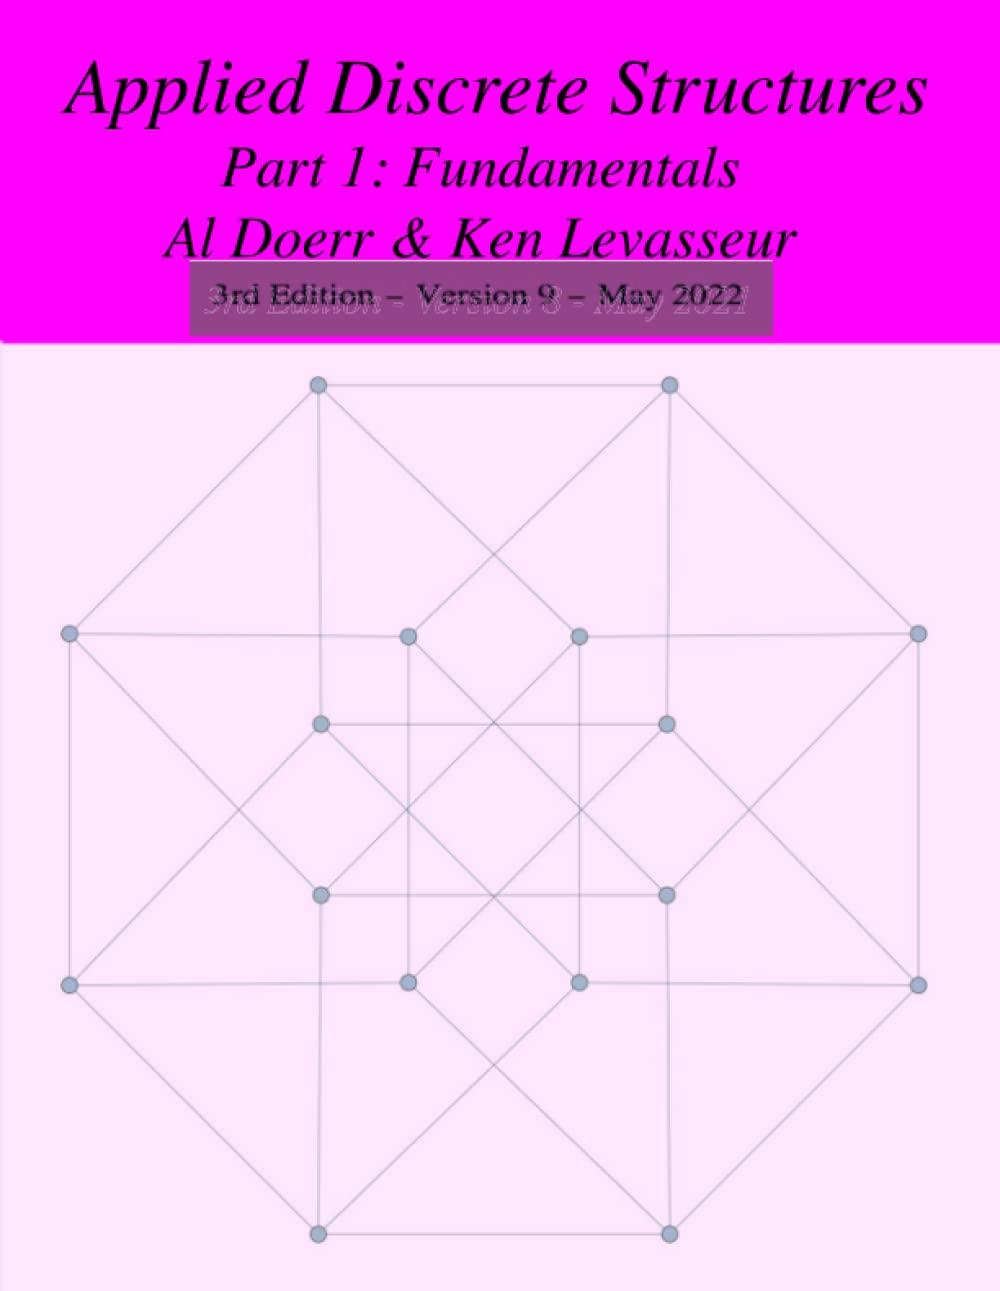 applied discrete structures part 1 fundamentals volume 9 3rd edition ken levasseur, al doerr 136593358x,